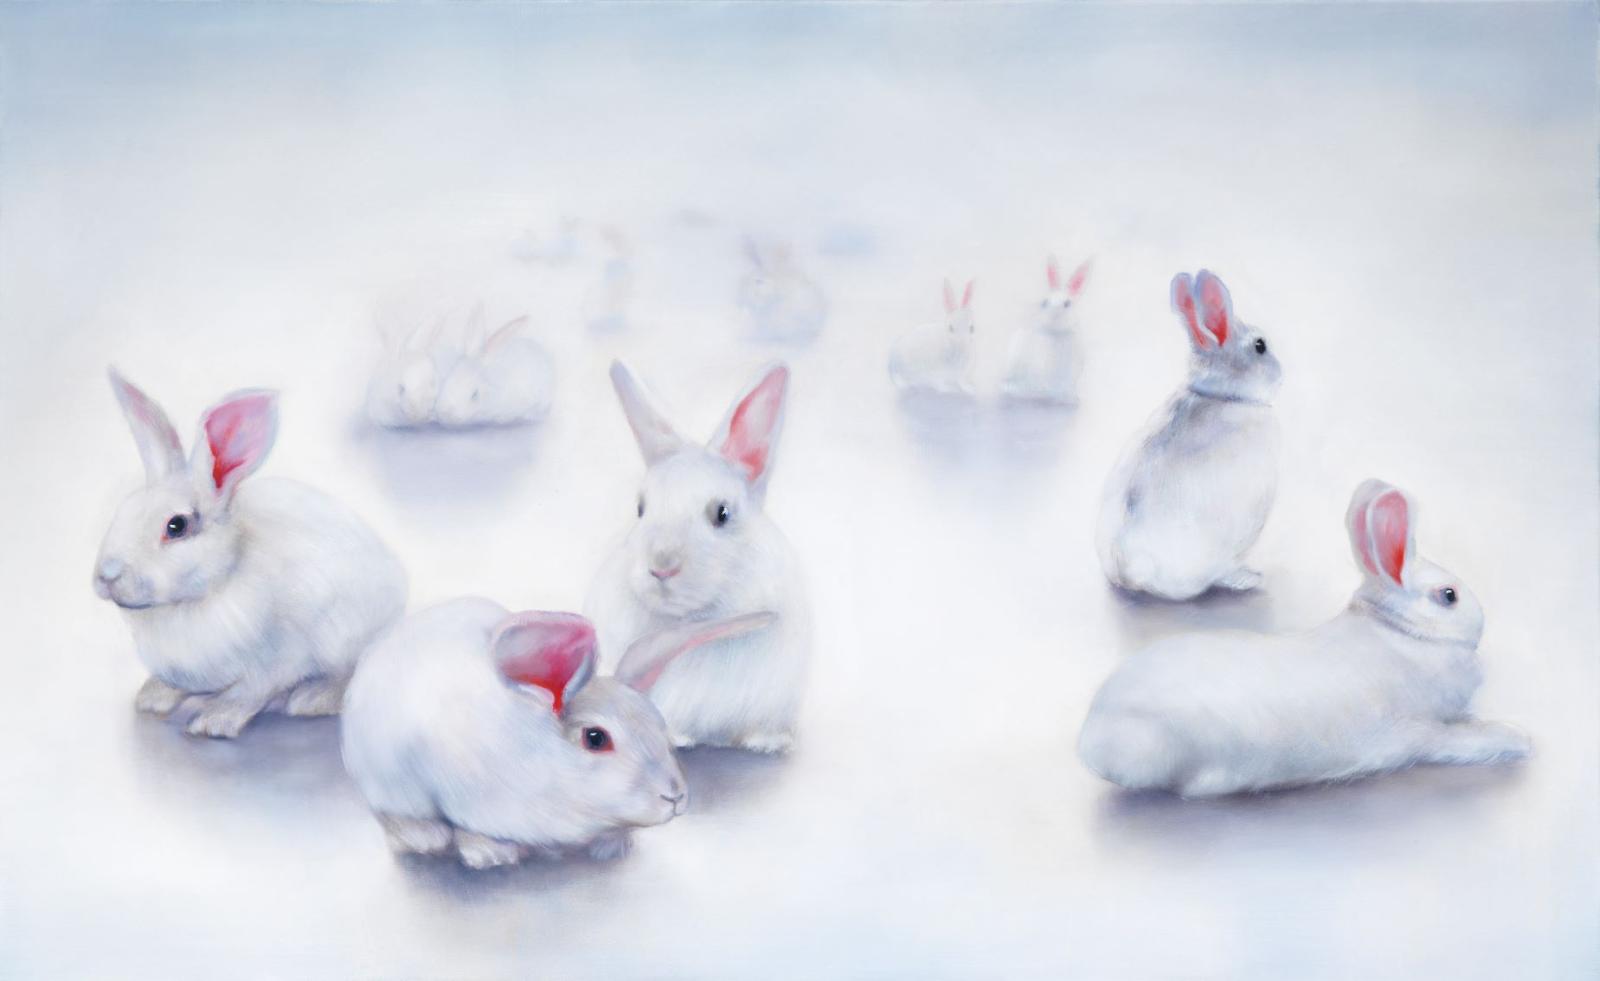 Simone Haack, In the Rabbit Hole, 2020, Öl auf Baumwolle, 80 cm x 130 cm, verkauft, Galerie Cyprian Brenner